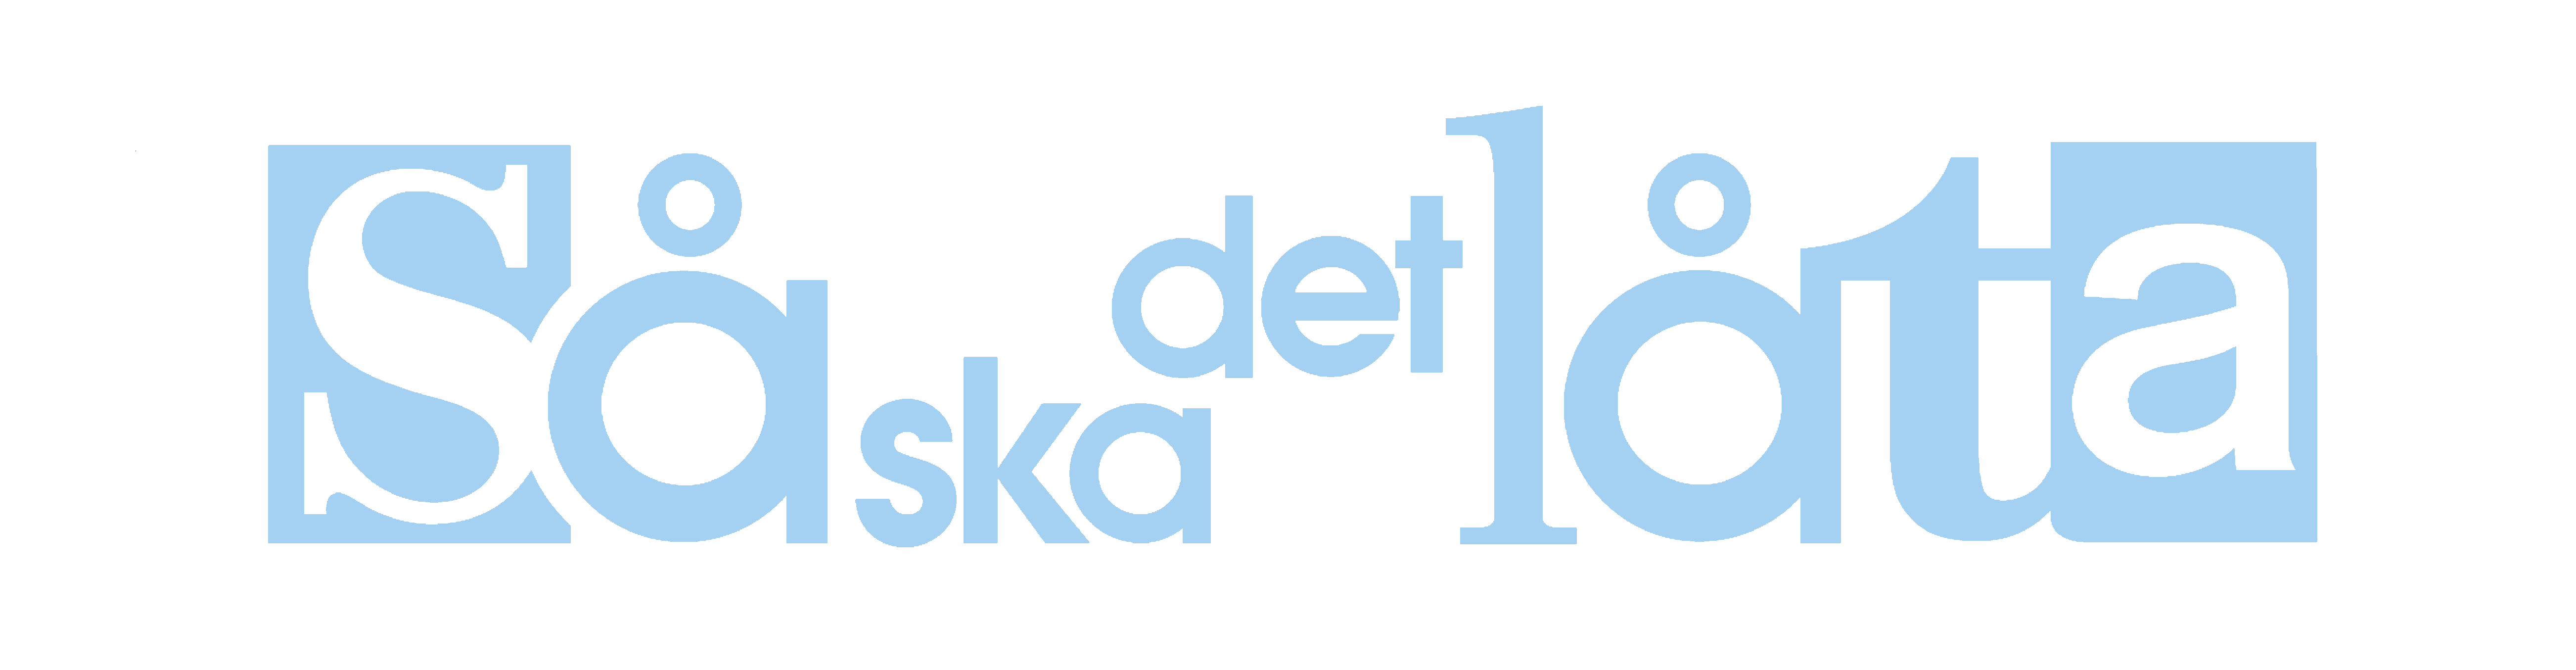 LogoSåSkaDetLåta